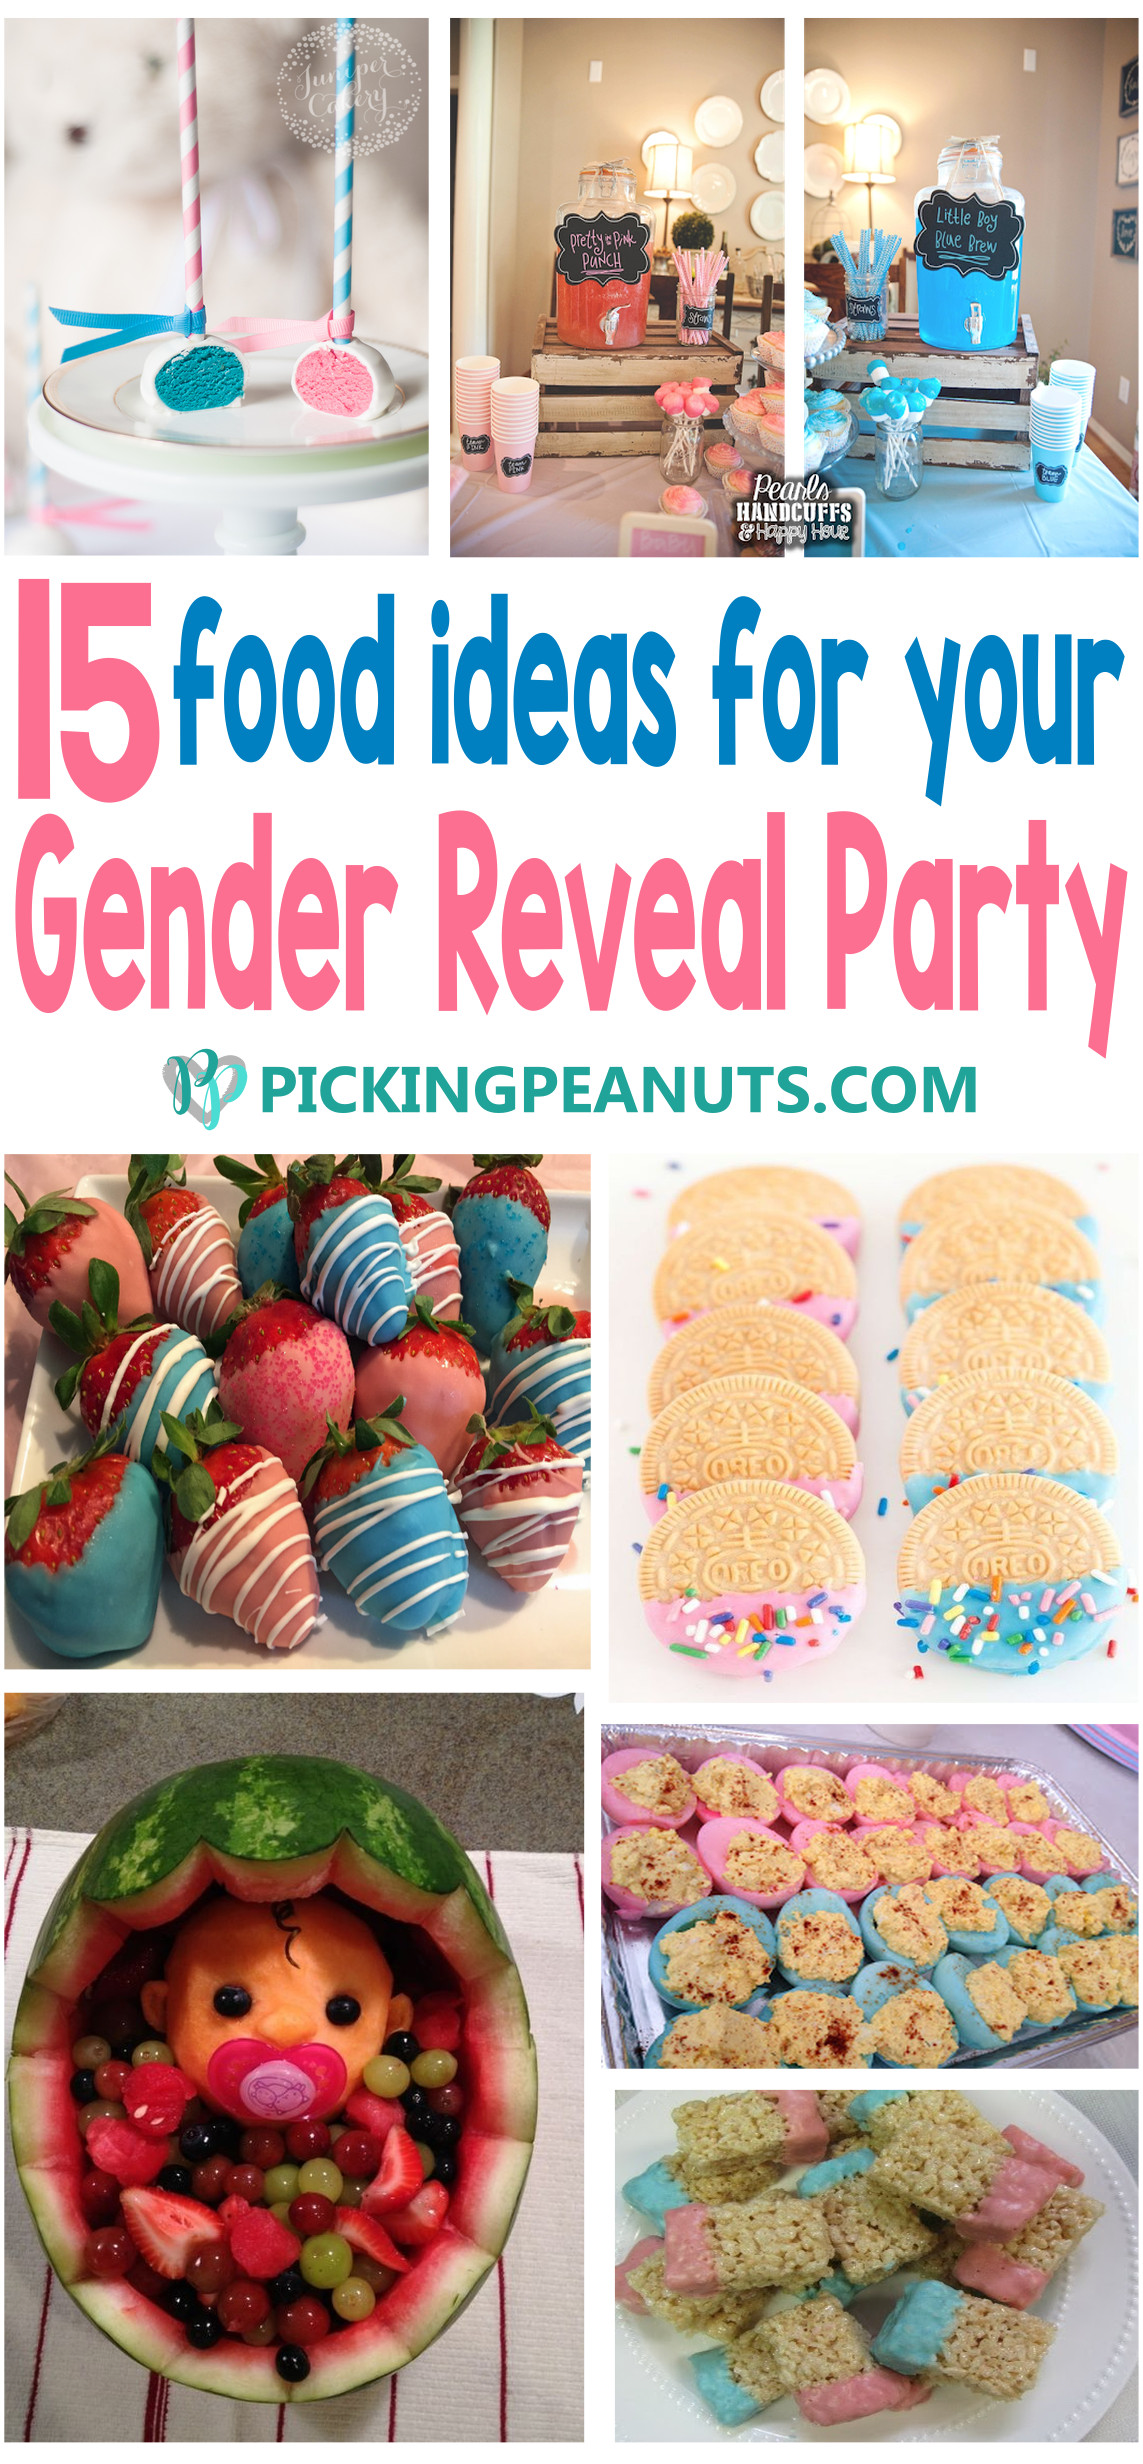 Finger Food Ideas For Gender Reveal Party
 15 Gender Reveal Party Food Ideas Picking Peanuts